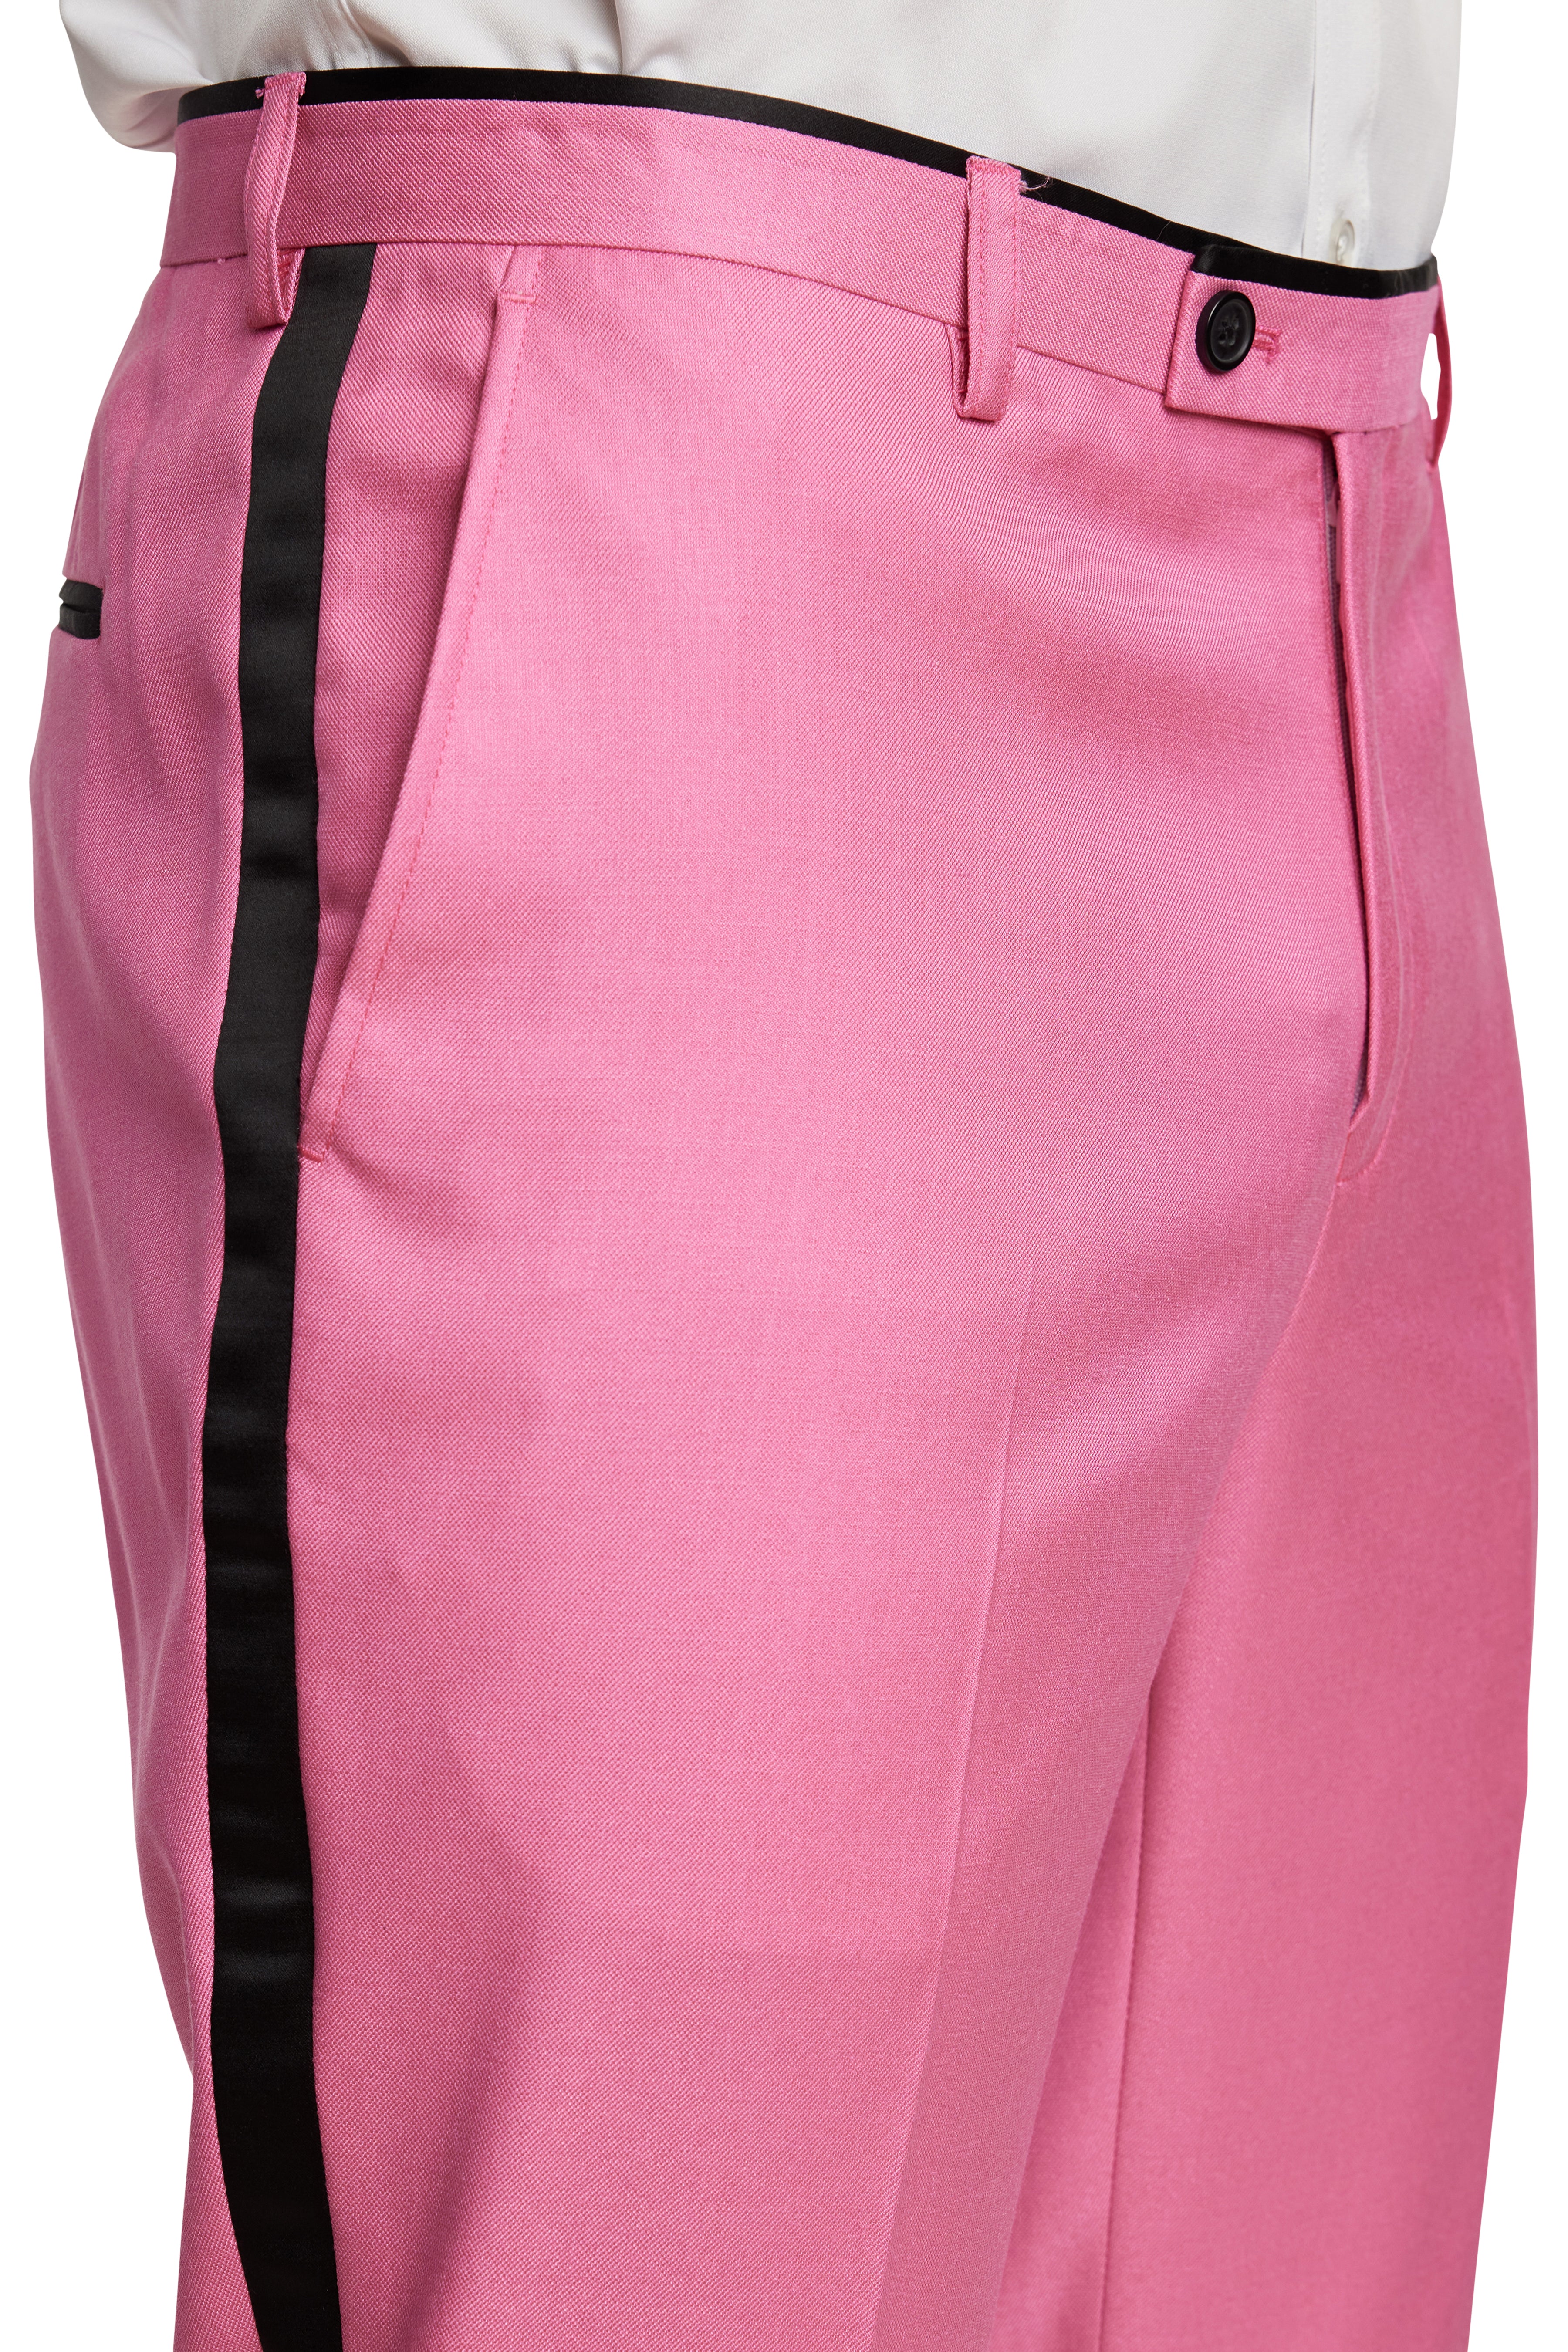 Sloane Tux Pants - slim - Hot Pink